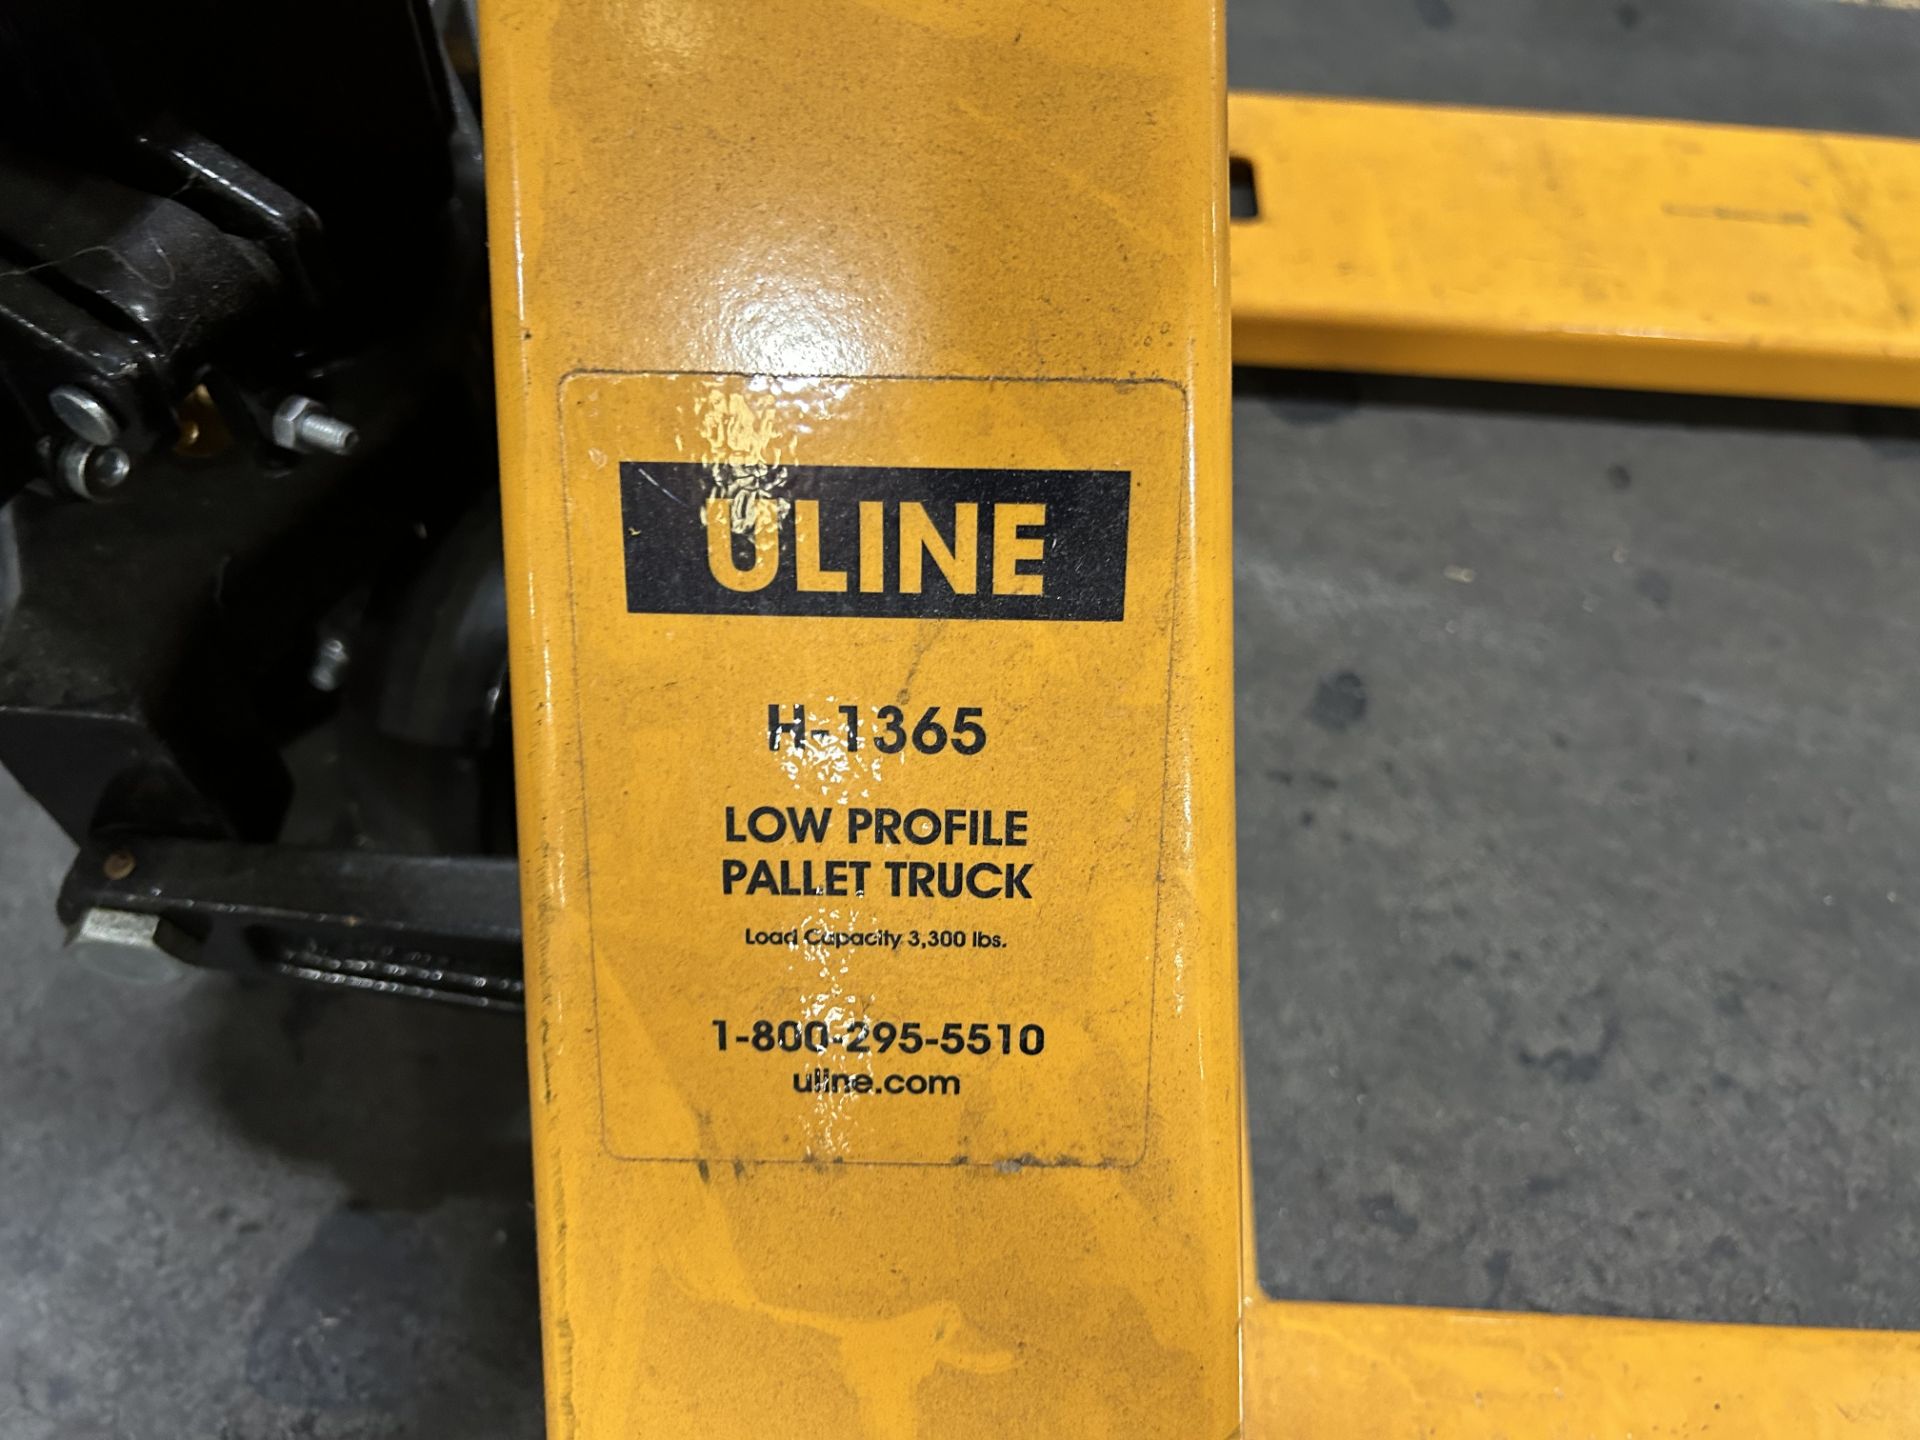 U-Line Low Profile Pallet Truck - Image 3 of 4